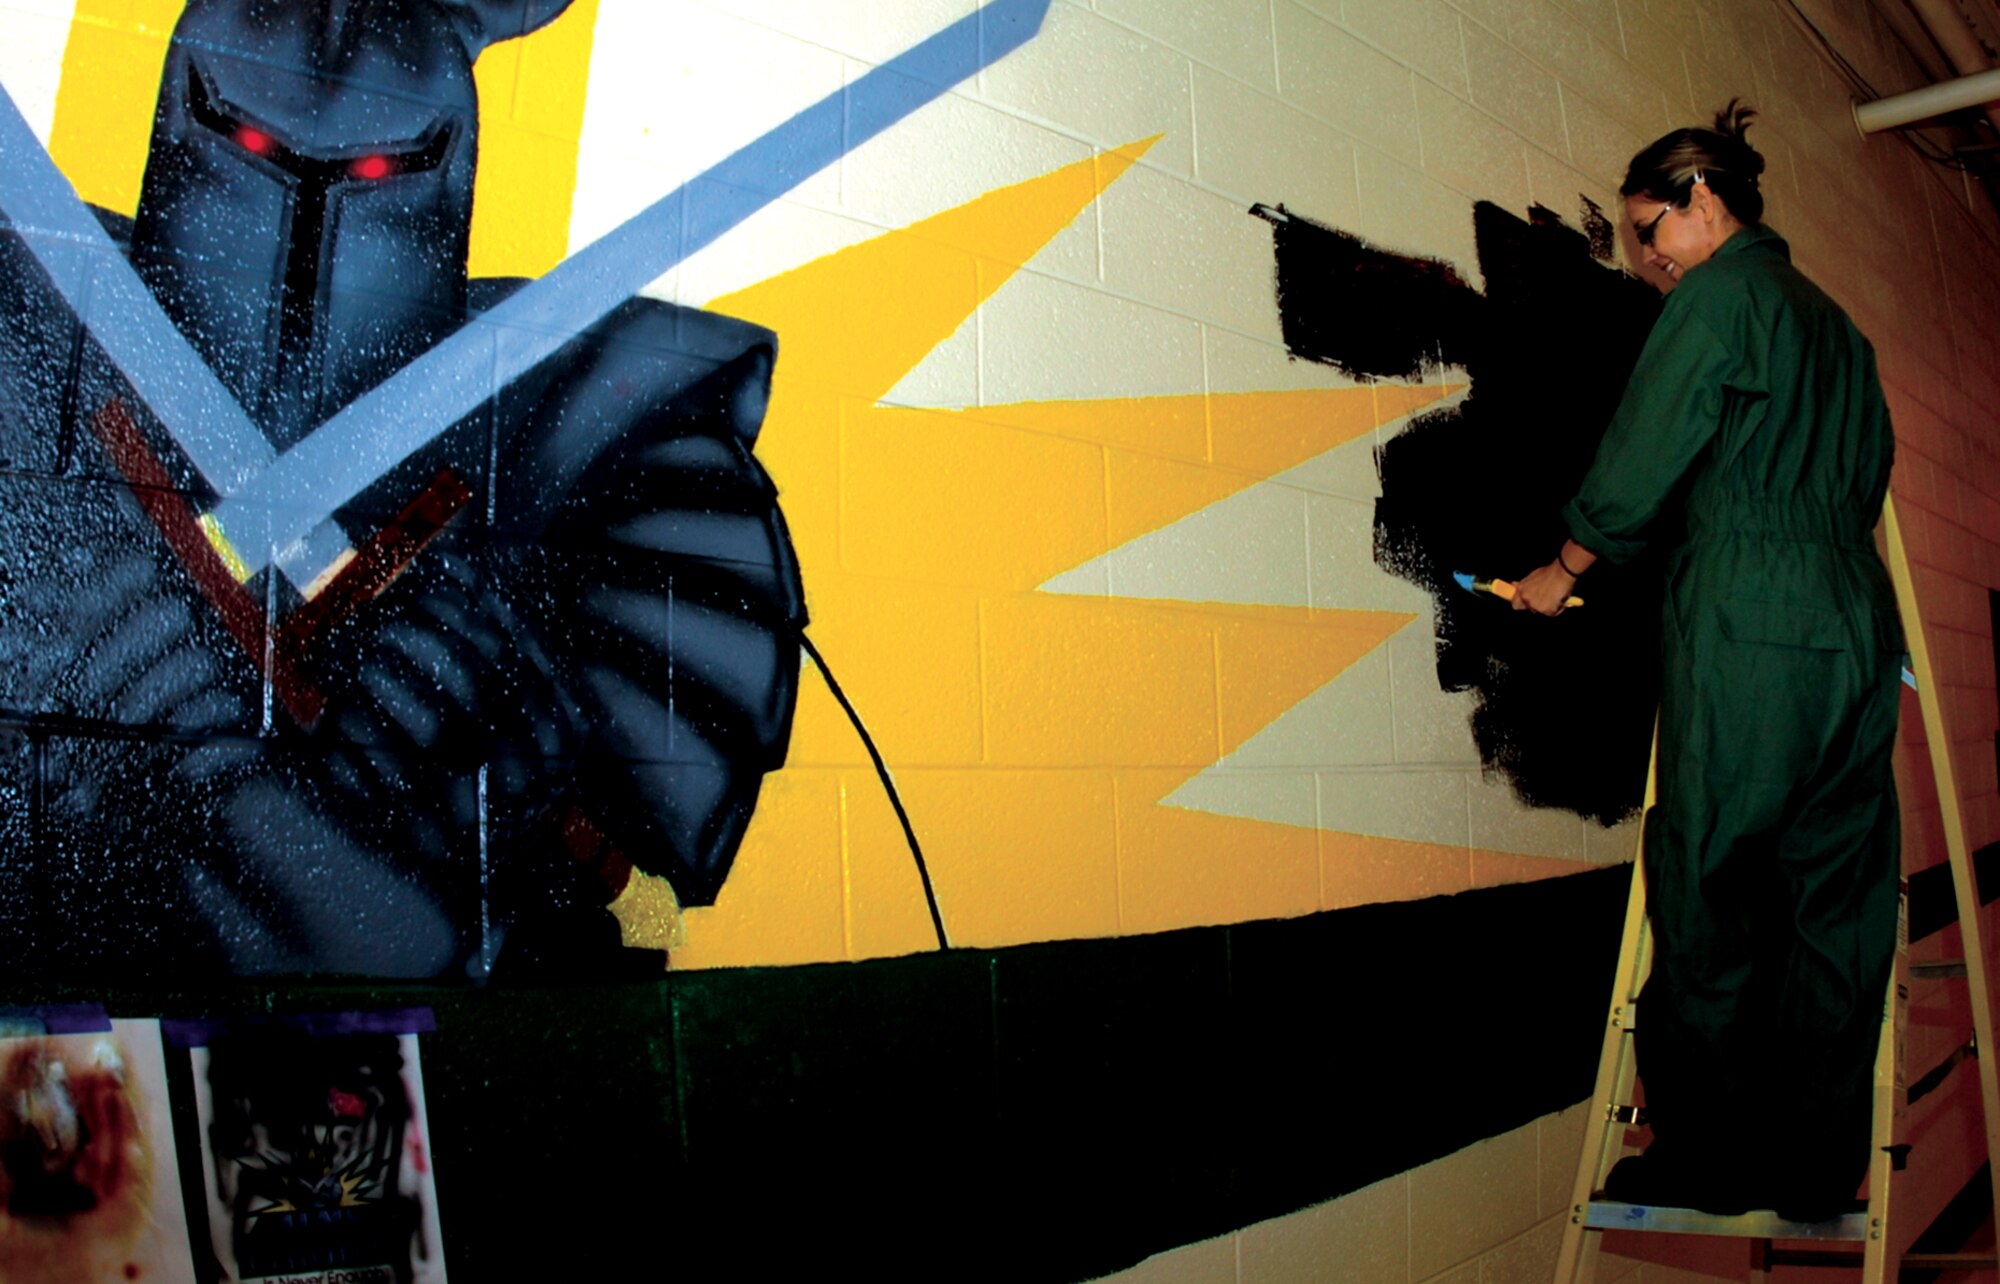 SEYMOUR JOHNSON AIR FORCE BASE, N.C. - Senior Airman Angie Madole paints a mural at the 4th Equipment Maintenance Squadron headquarters building on hangar row. 